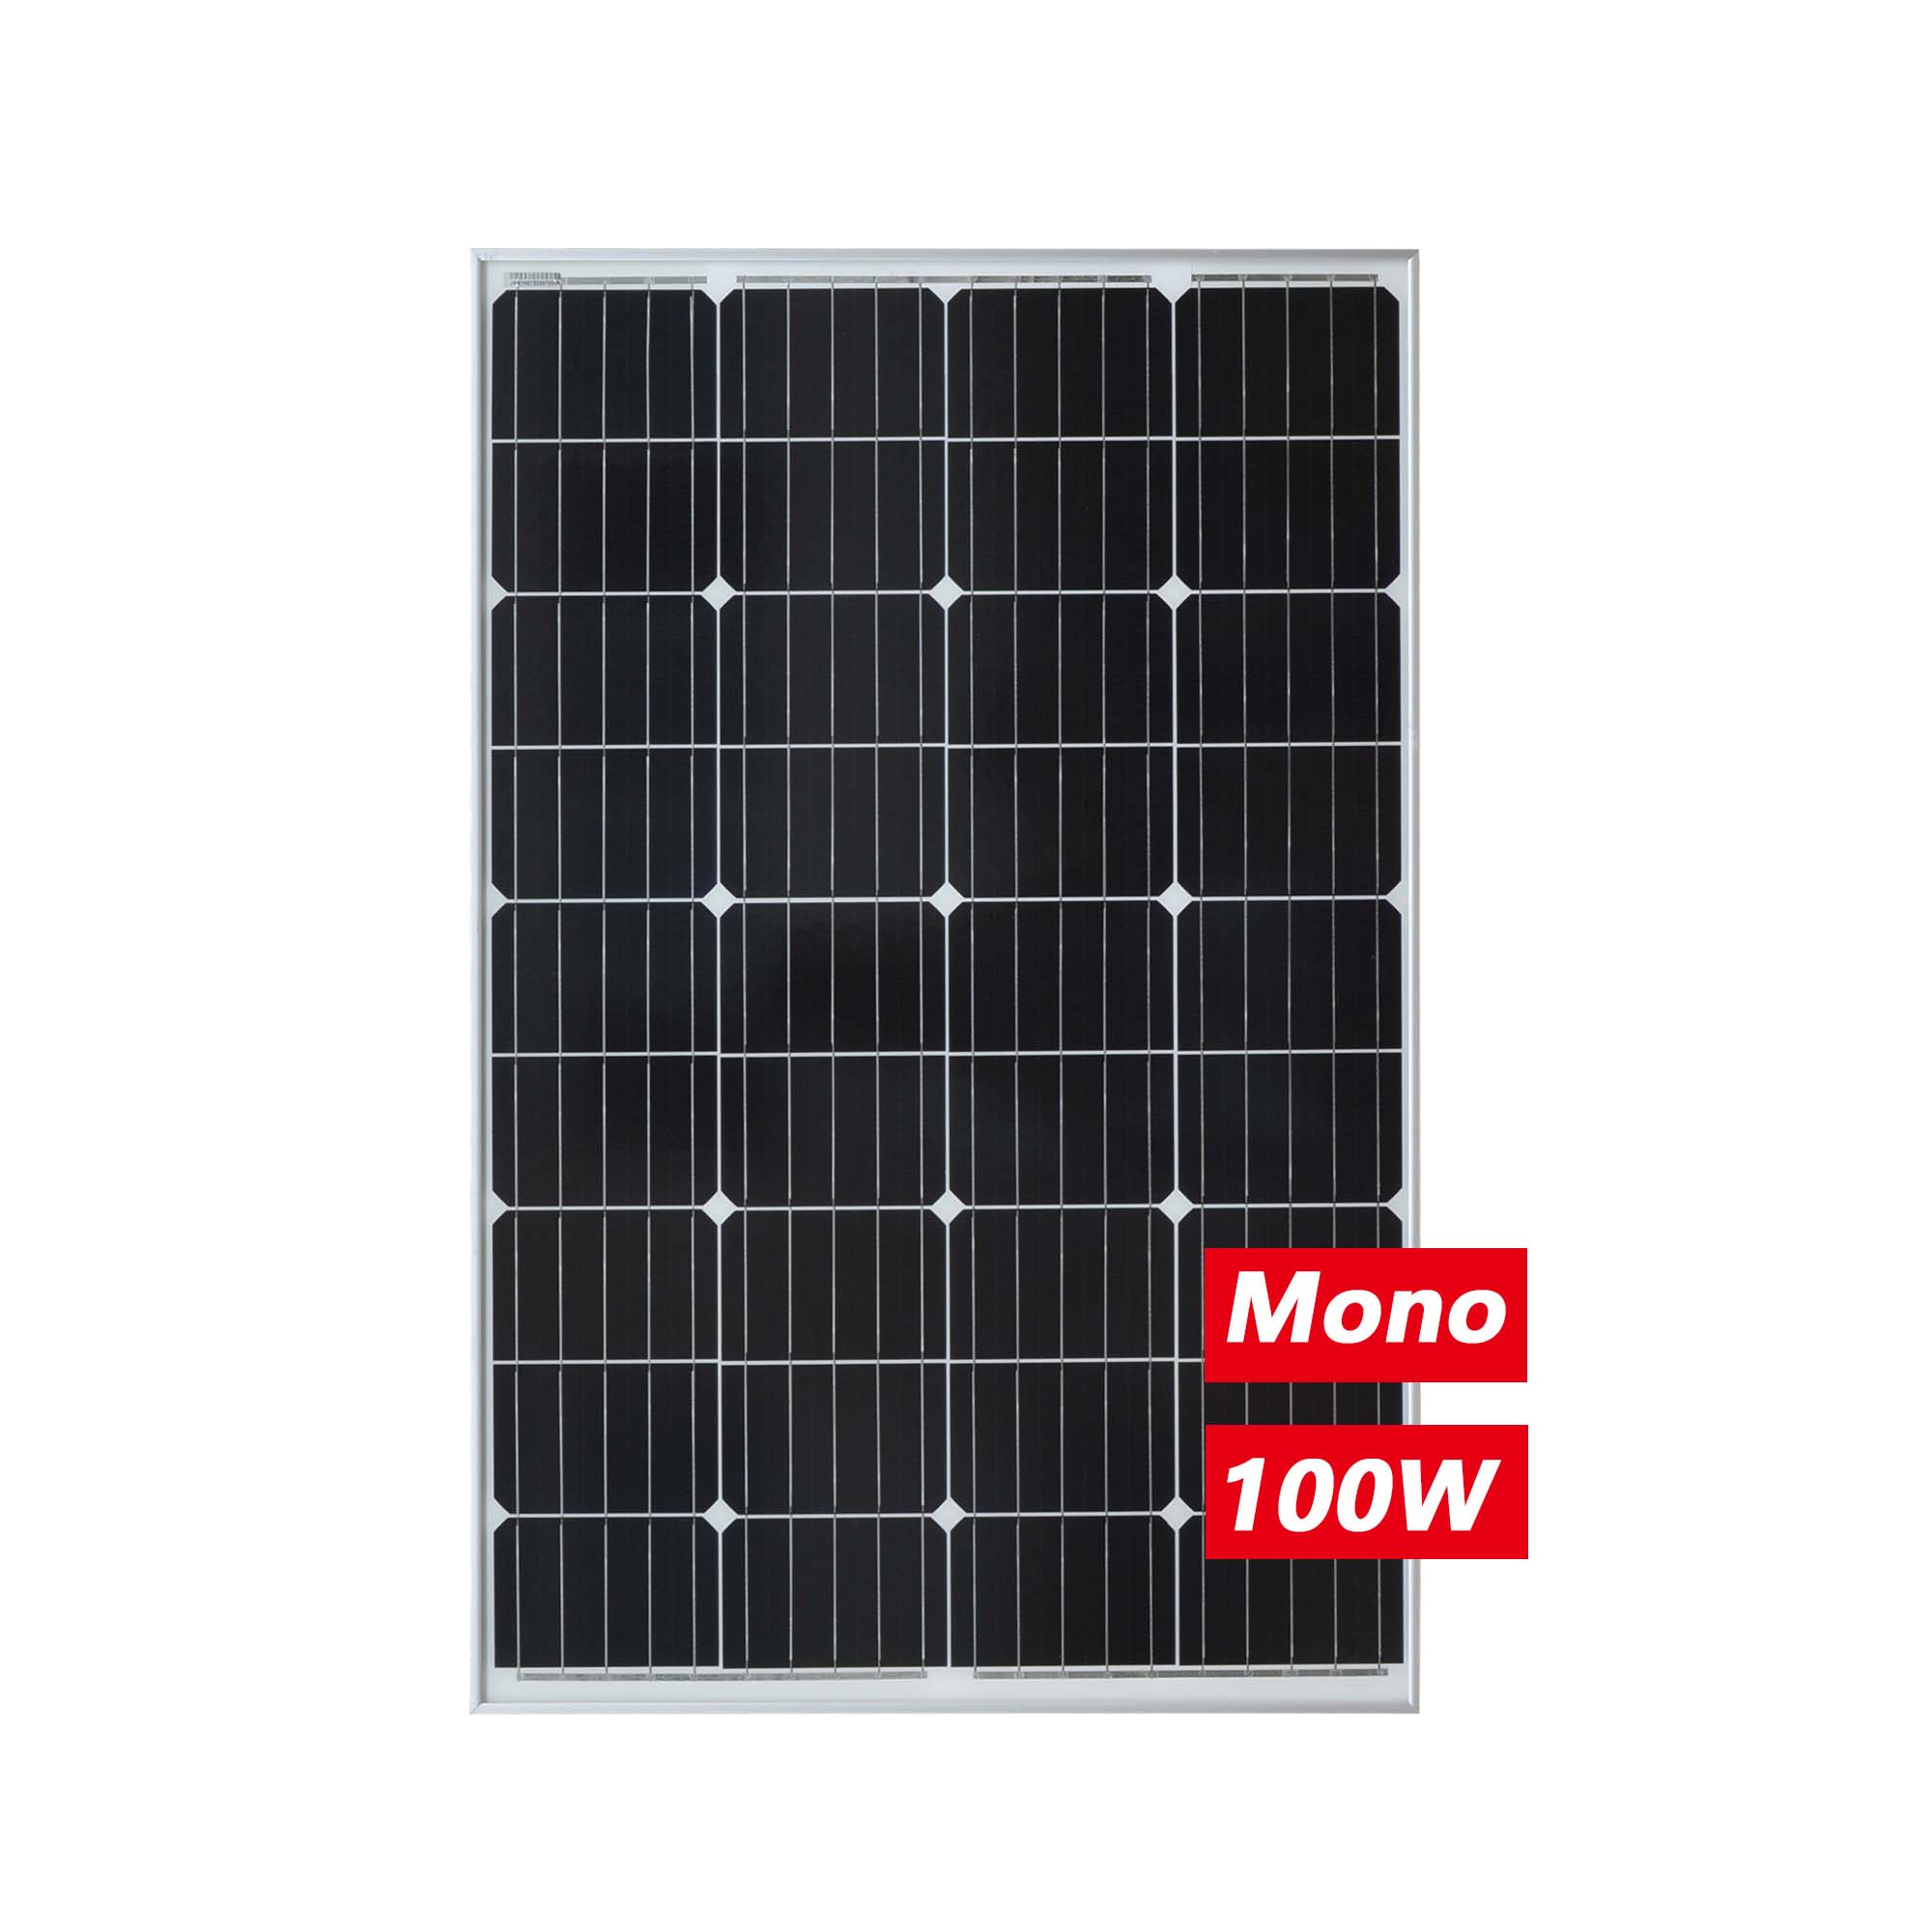 100 watt monocrystalline solar panel for home use